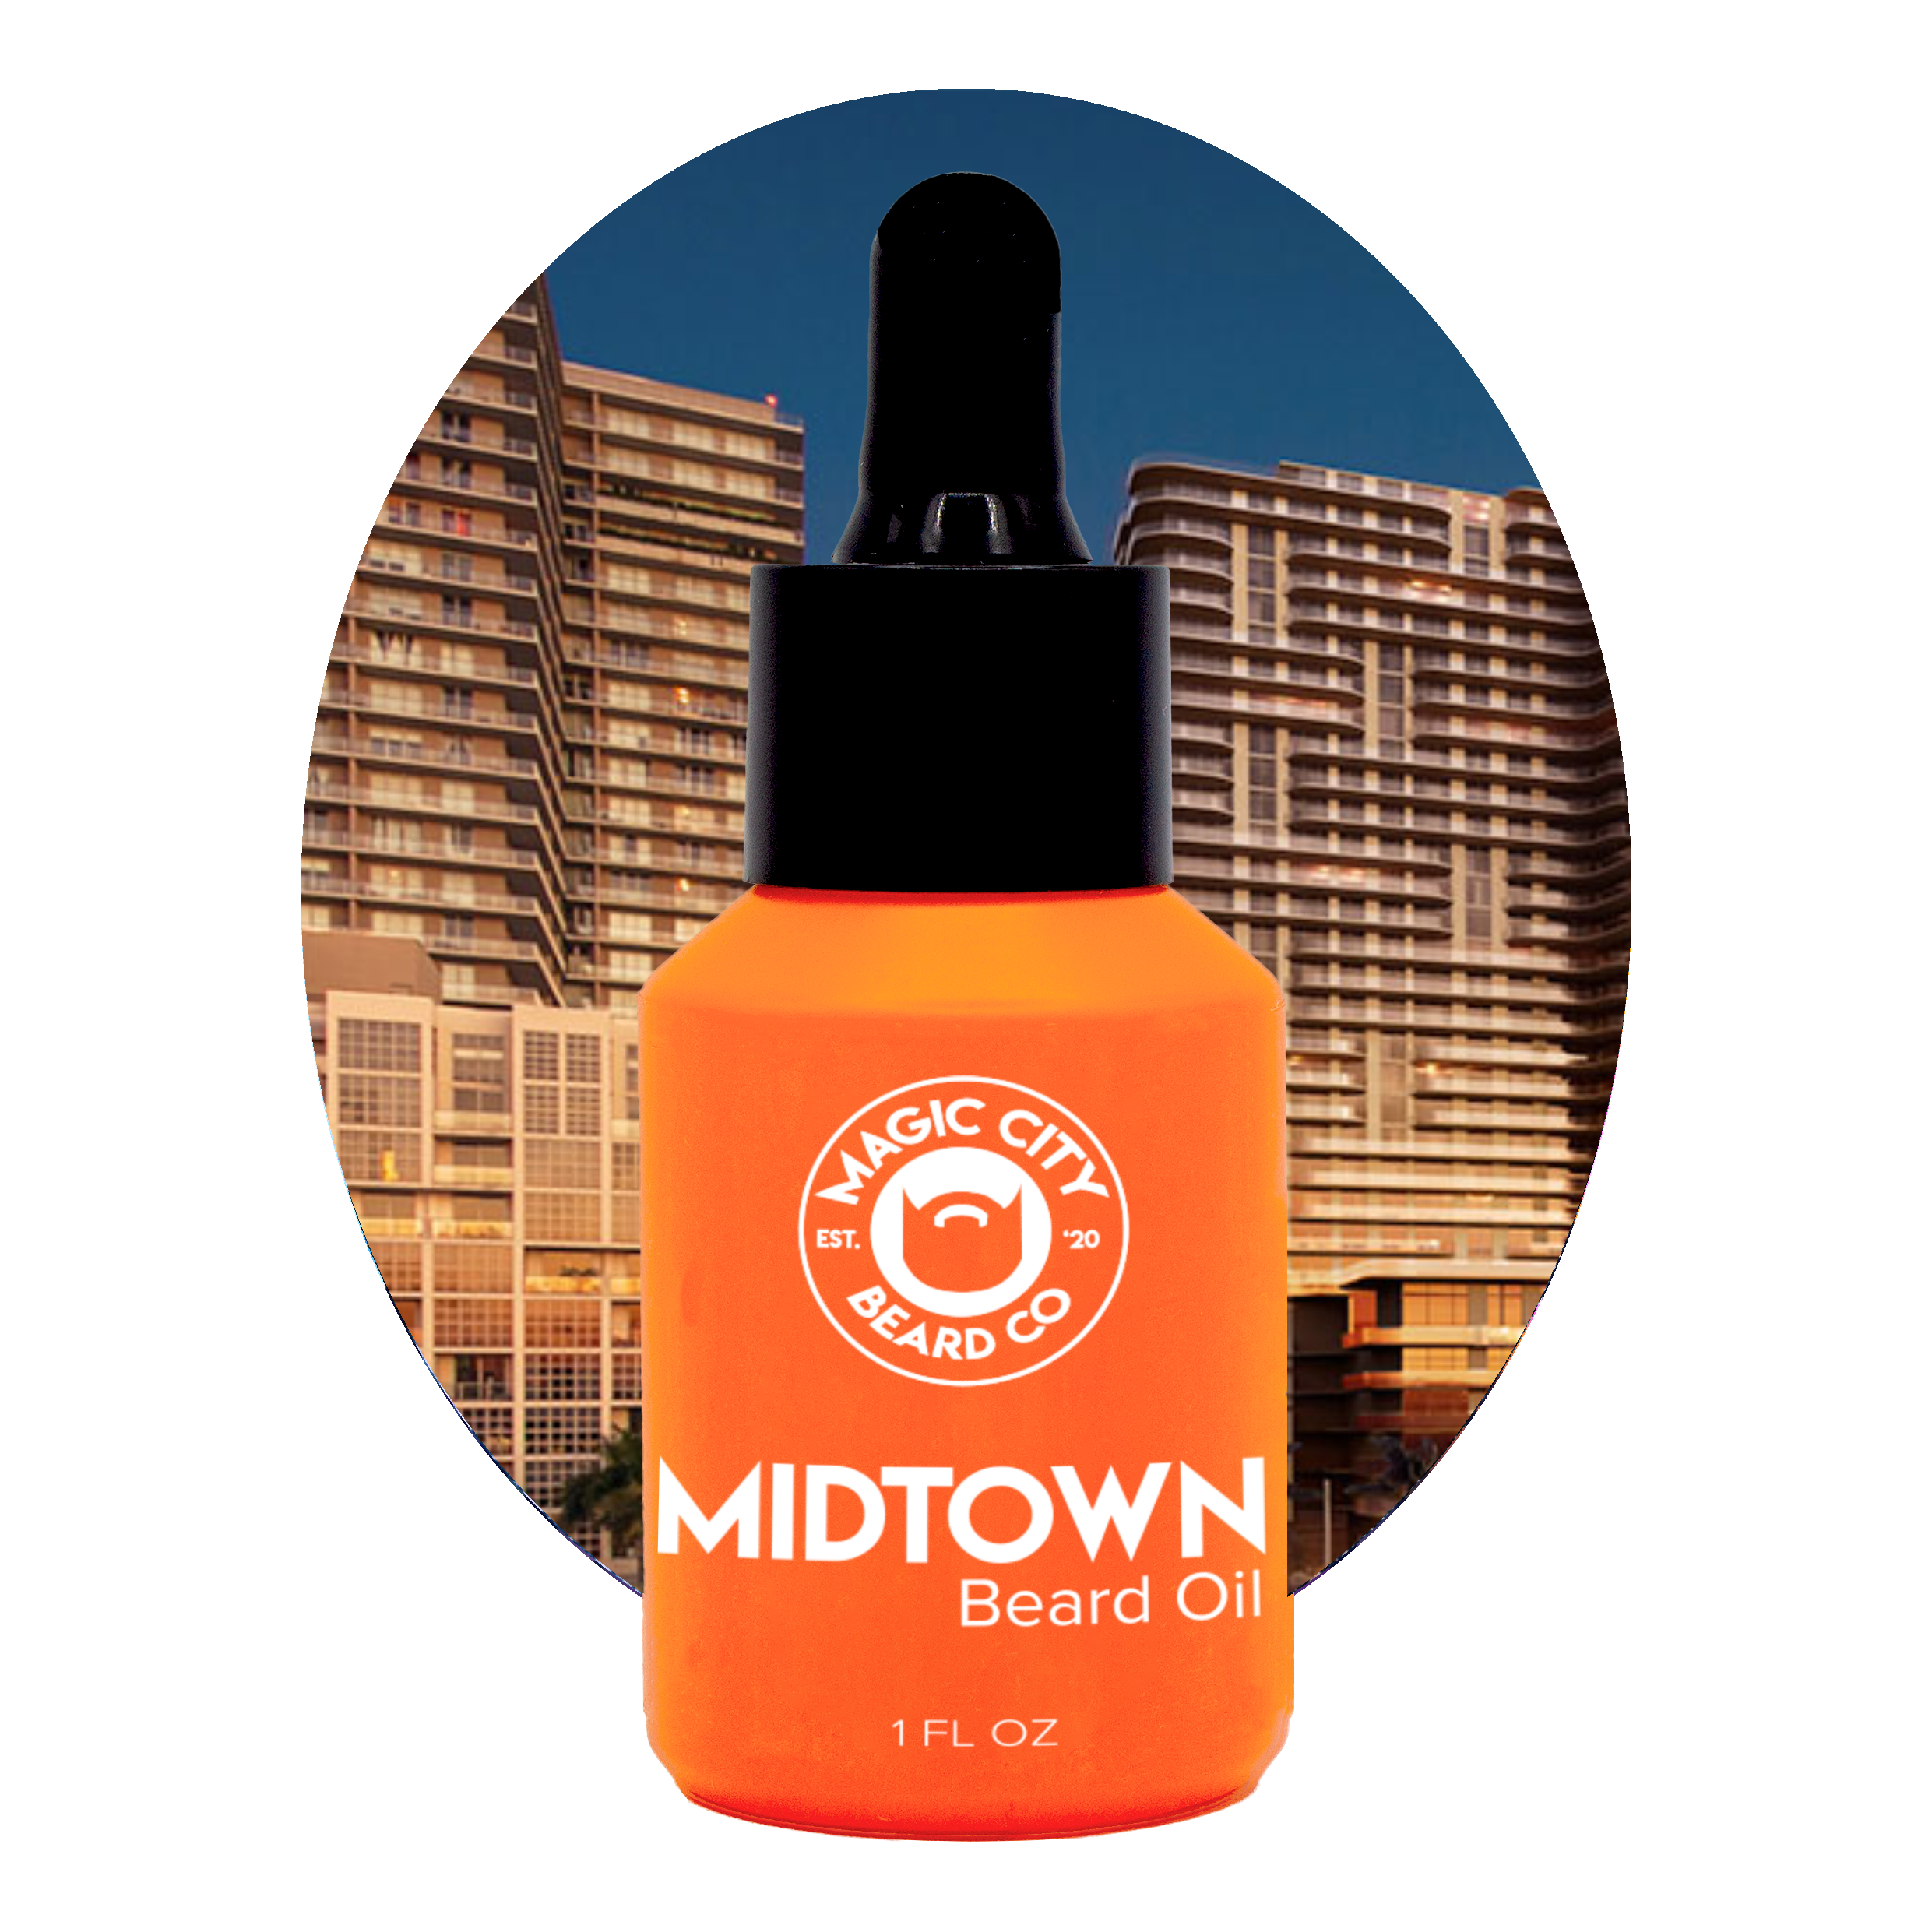 Midtown Beard Oil